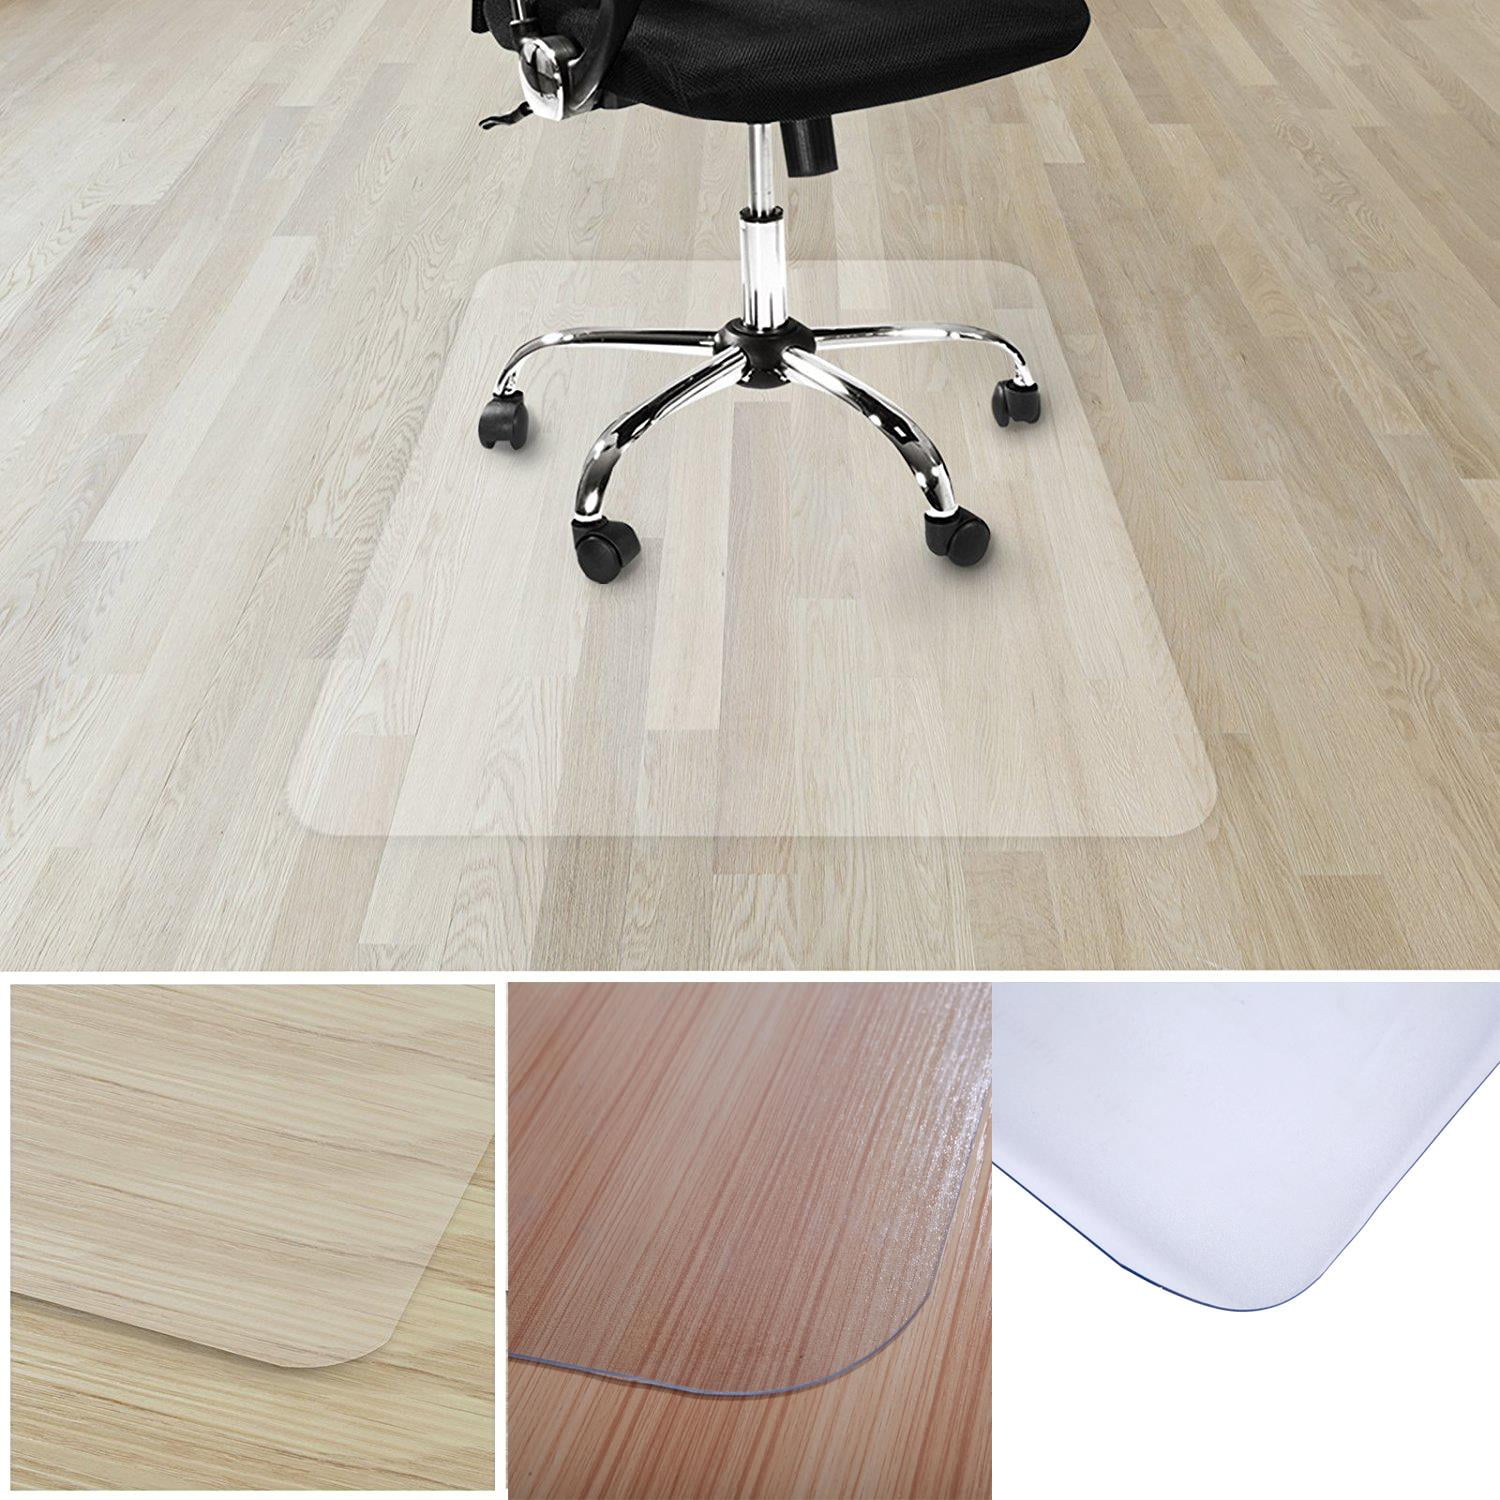 New 59" x 48" PVC Chair Floor Mat Home Office Protector For Hard Wood Floors 